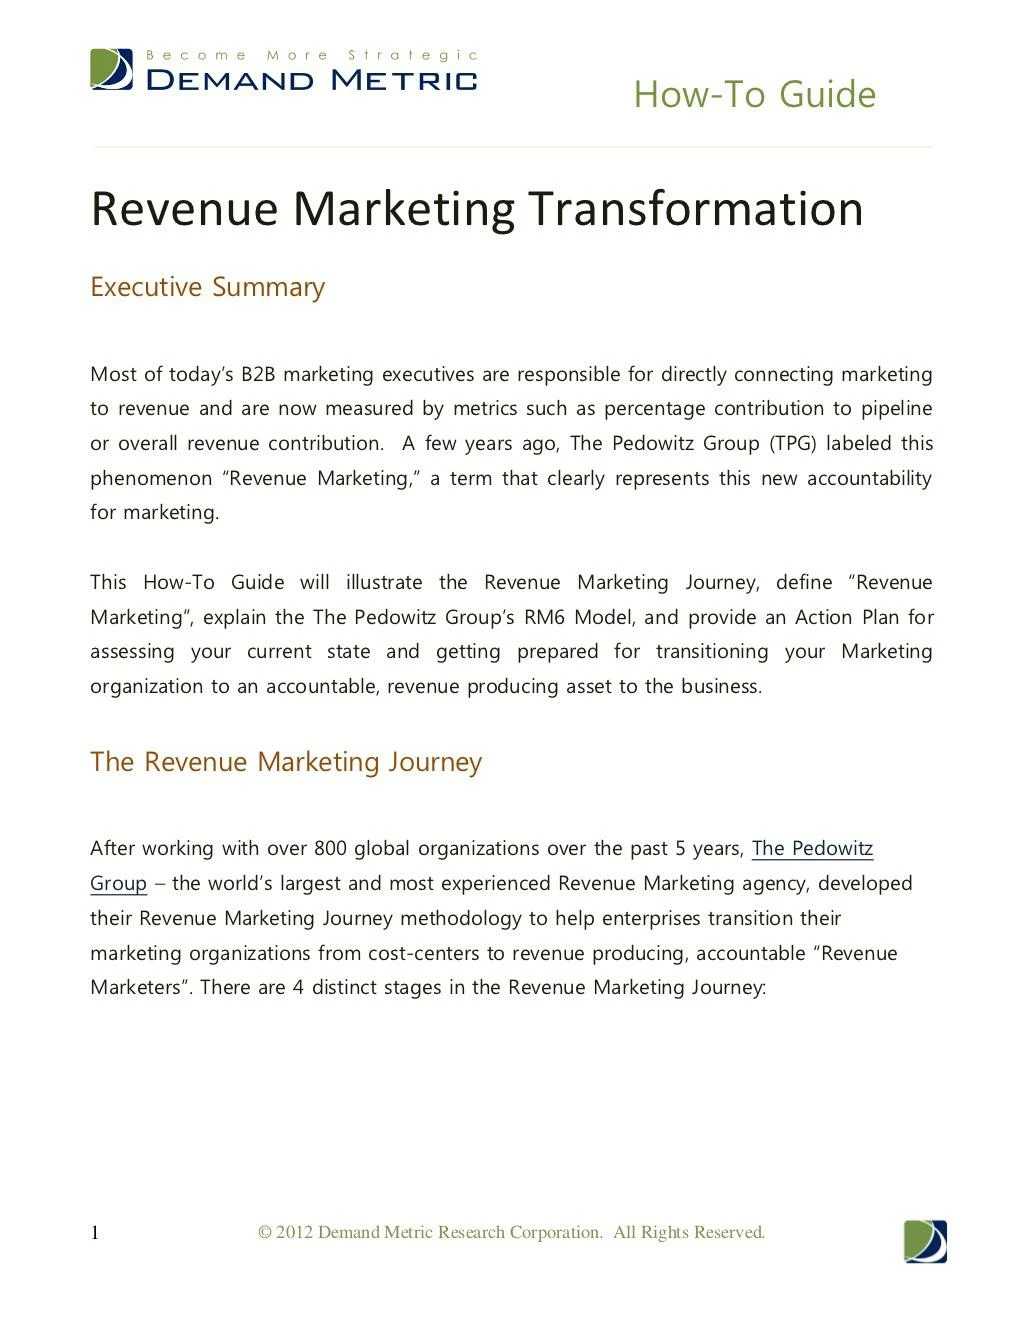 how to guide revenue marketing transformation